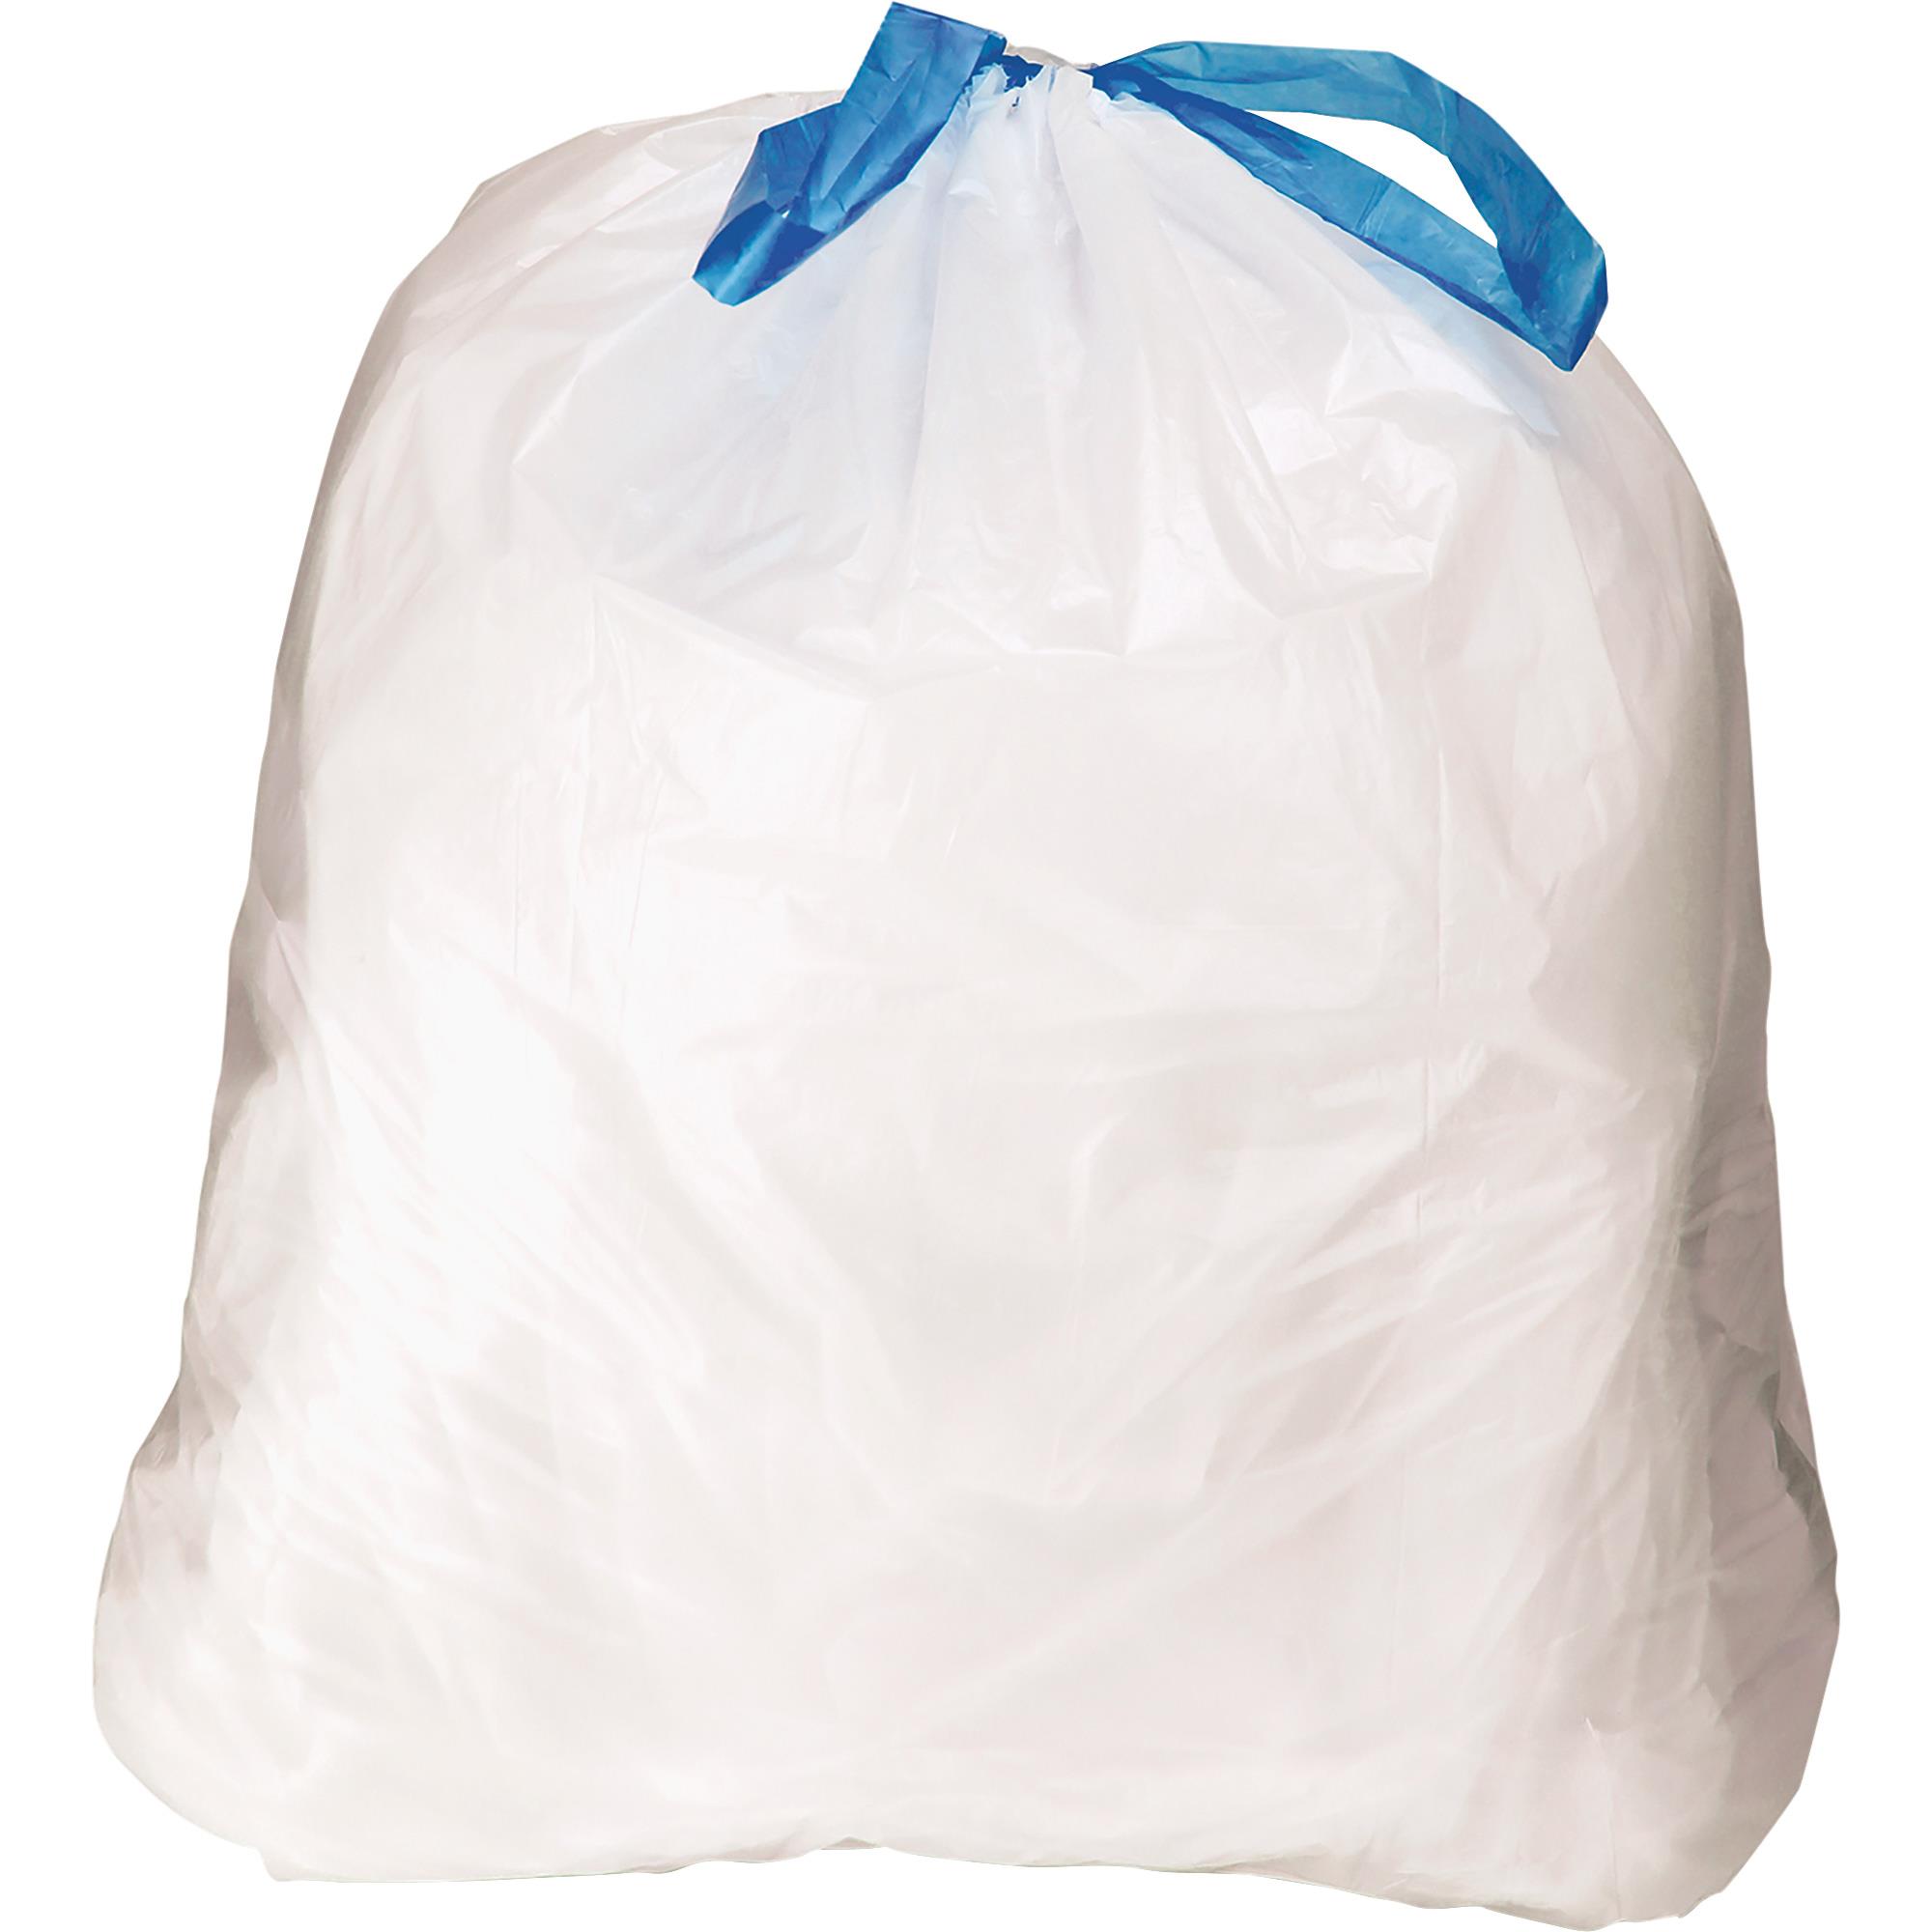 13-Gallon Drawstring Trash Bags  Standard Kitchen Trash Bags – PlasticMill